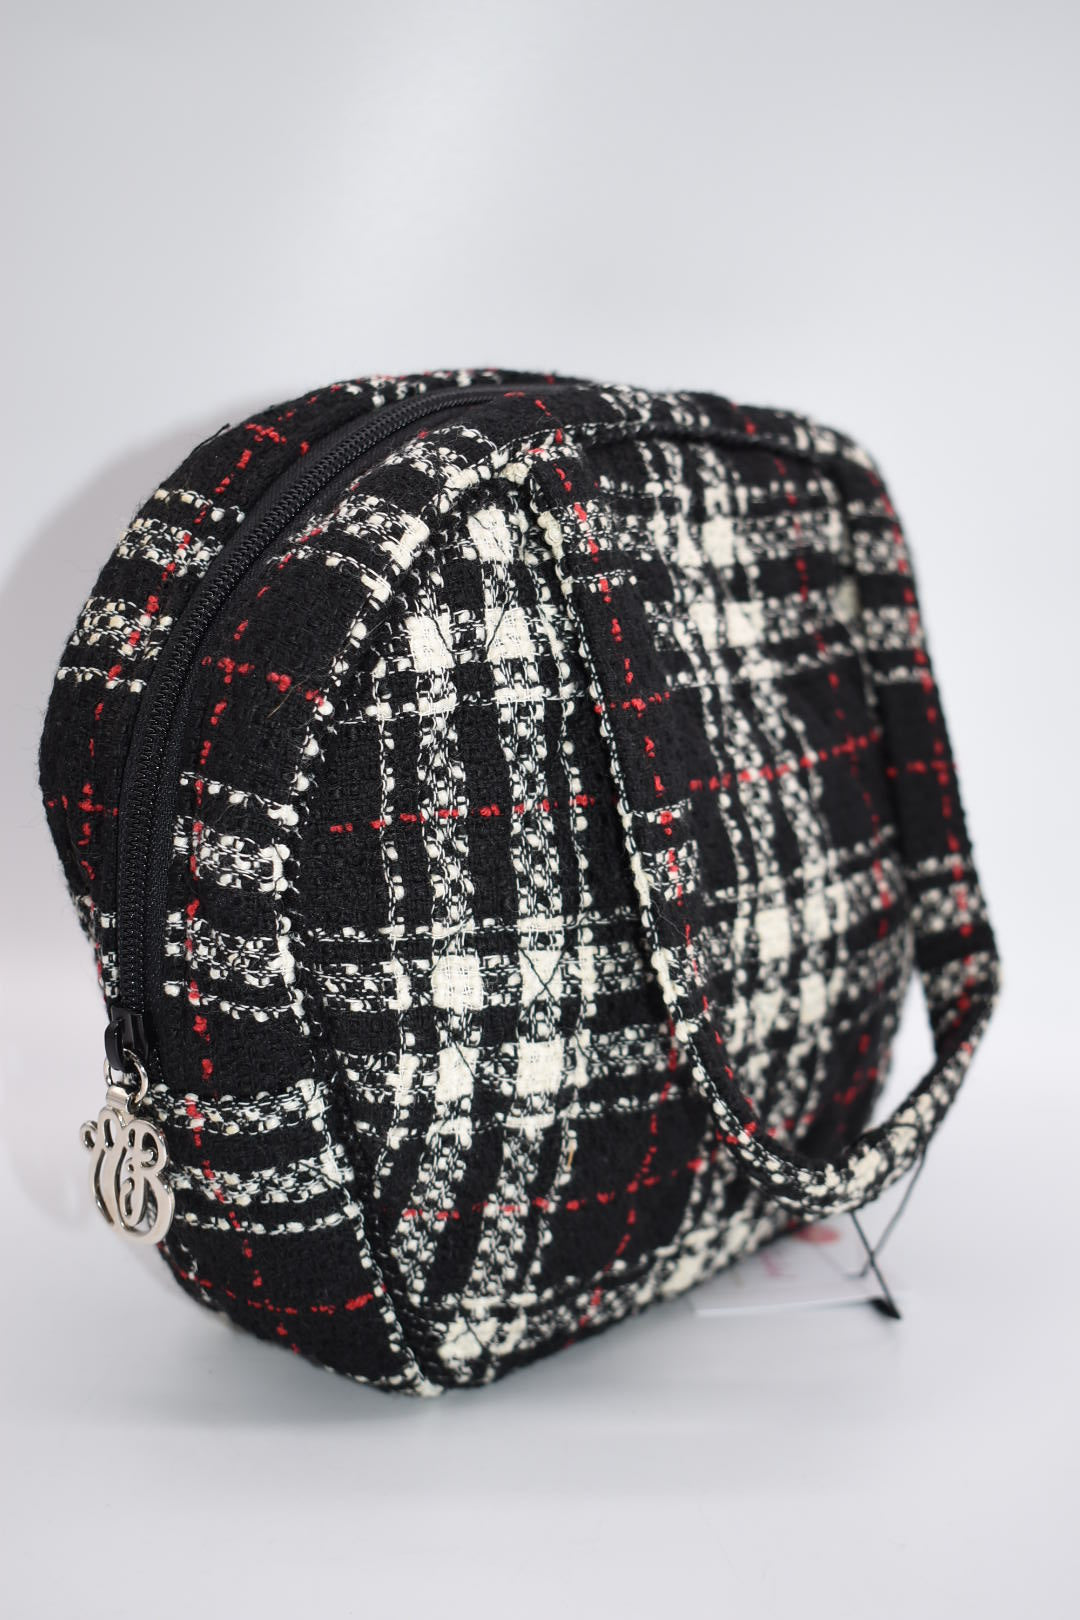 Vera Bradley Tweed Collection Wool Oval Tote Bag